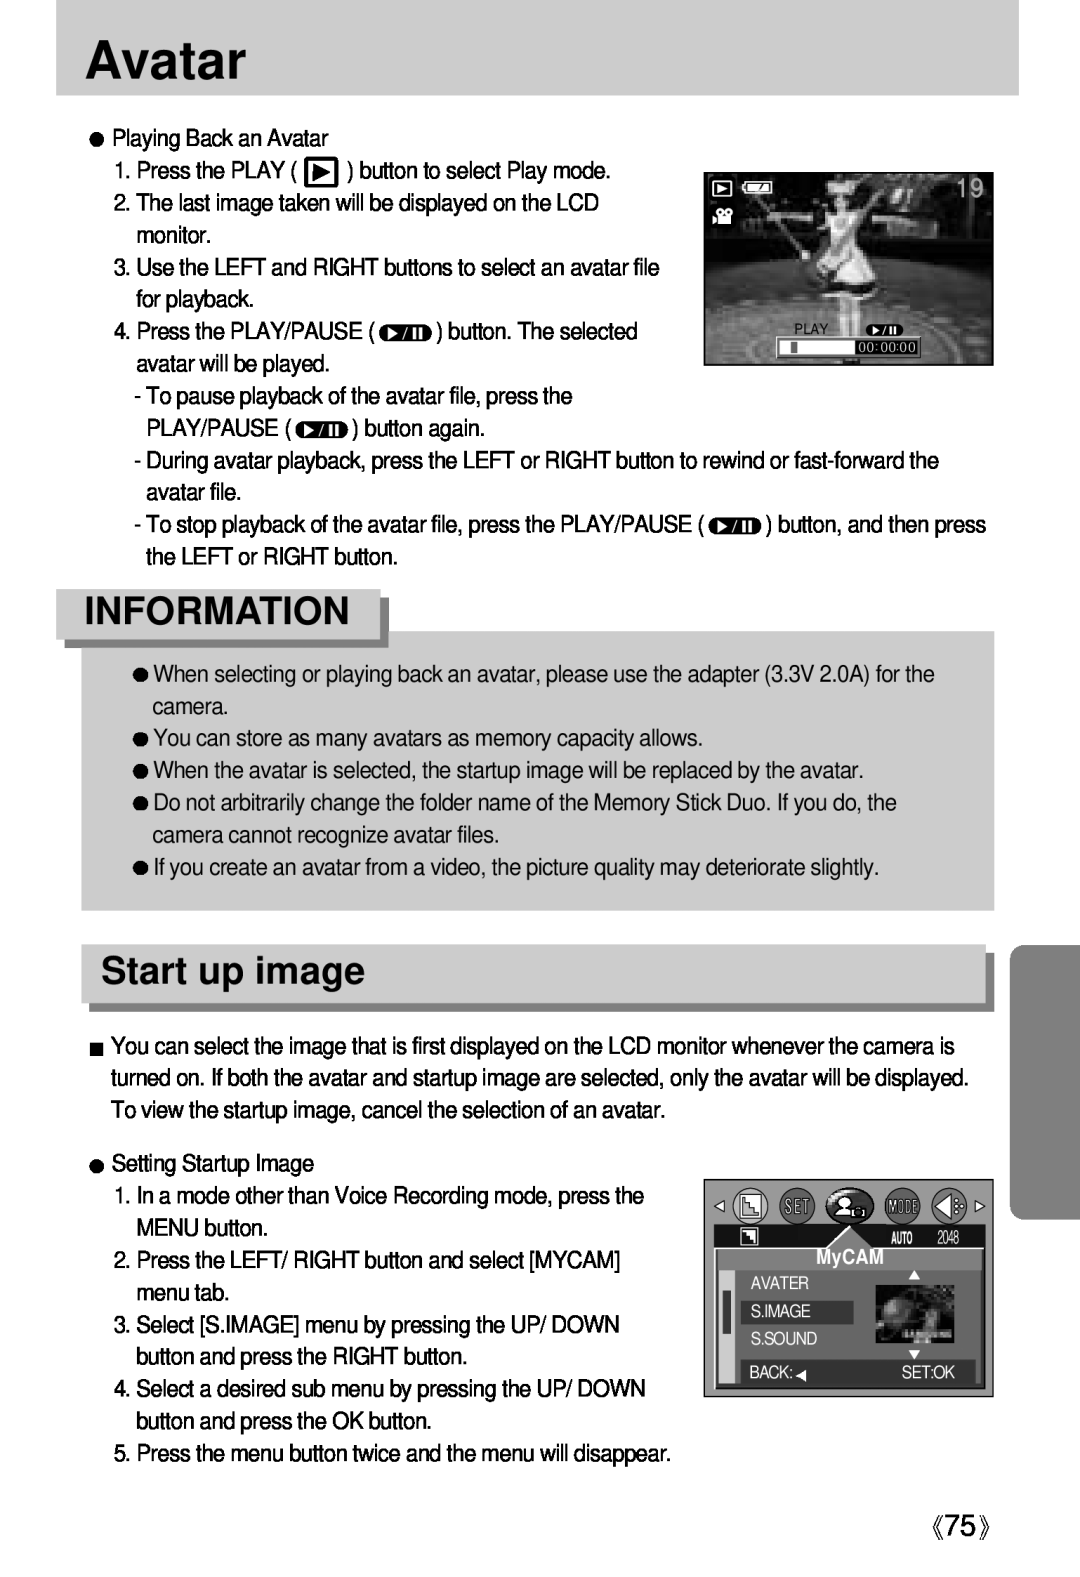 Samsung Digimax U-CA user manual Start up image, Avatar, Information, Avater S.Image S.Sound Backsetok 